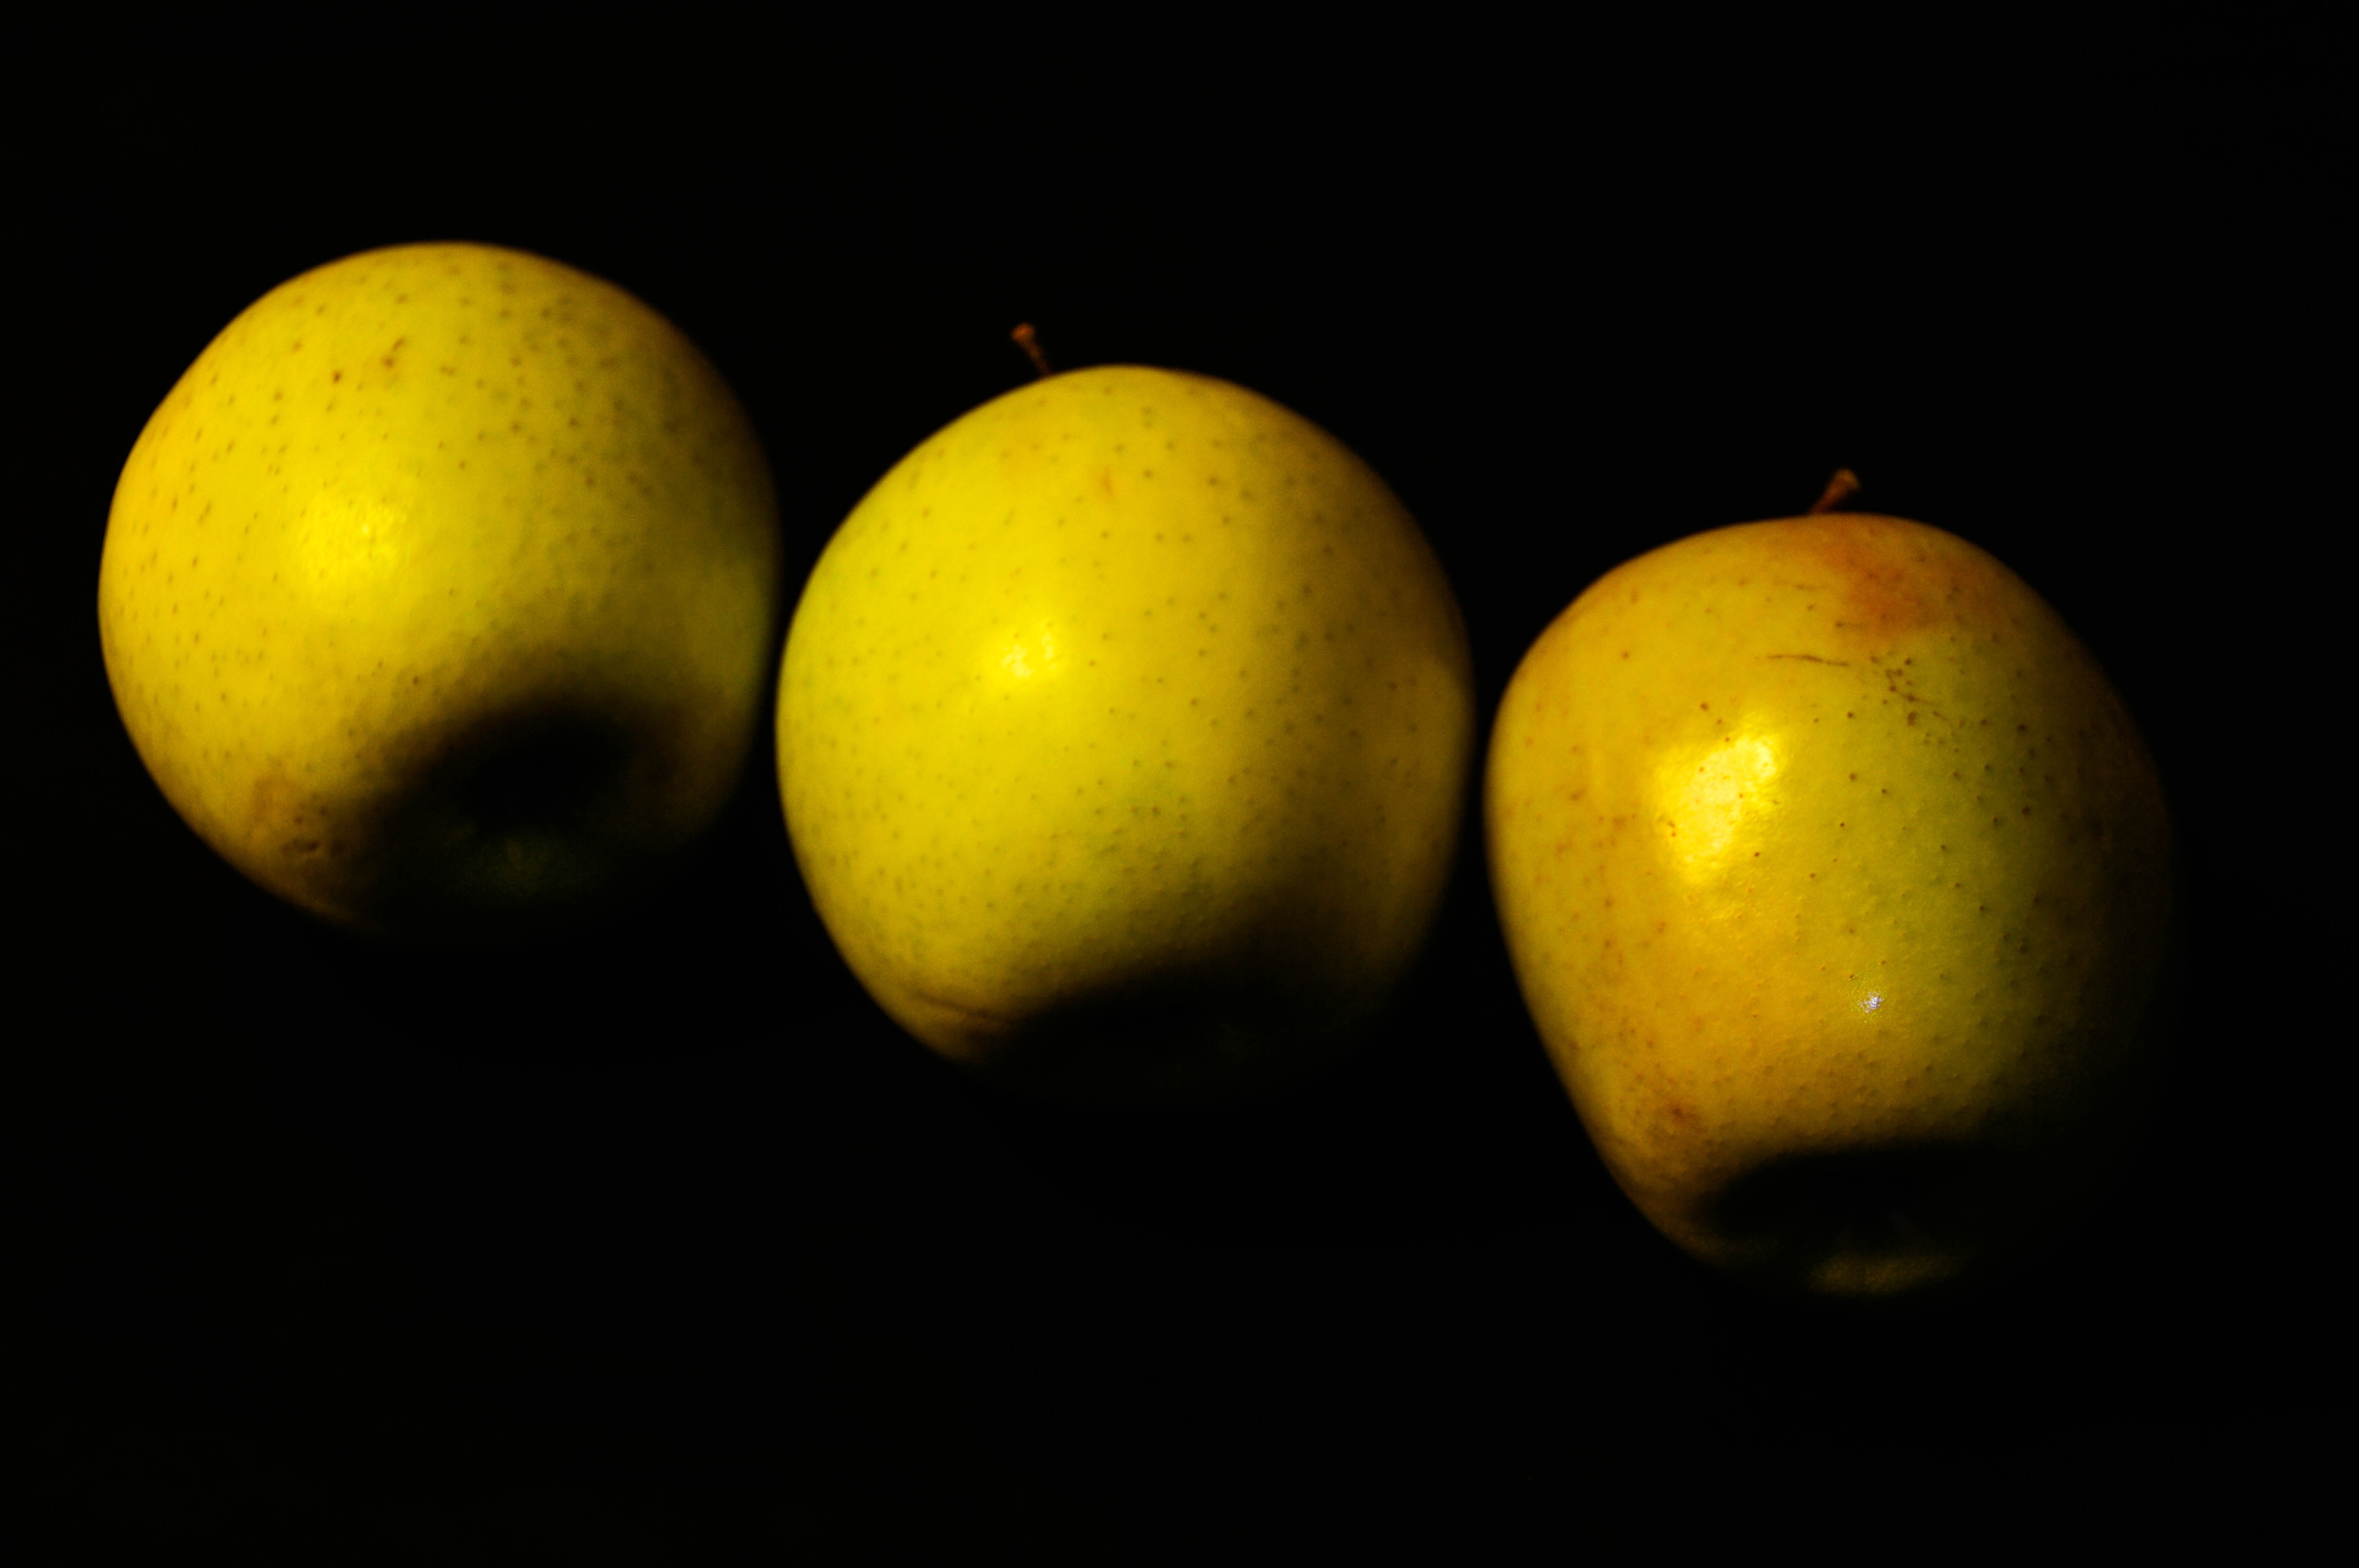 3 yellow apples